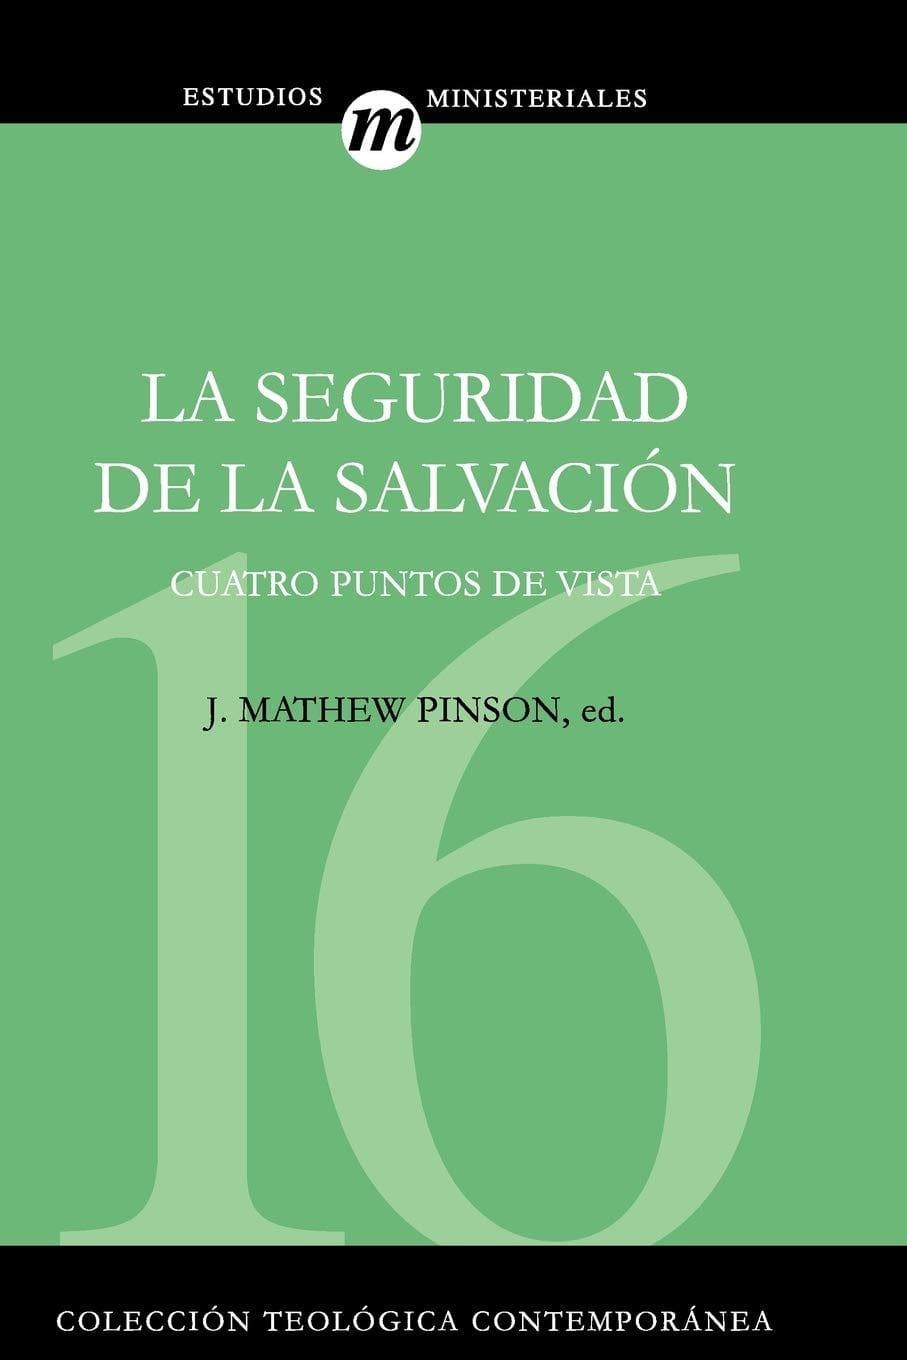 La seguridad de la salvación - J. Mathew Pinson - Pura Vida Books